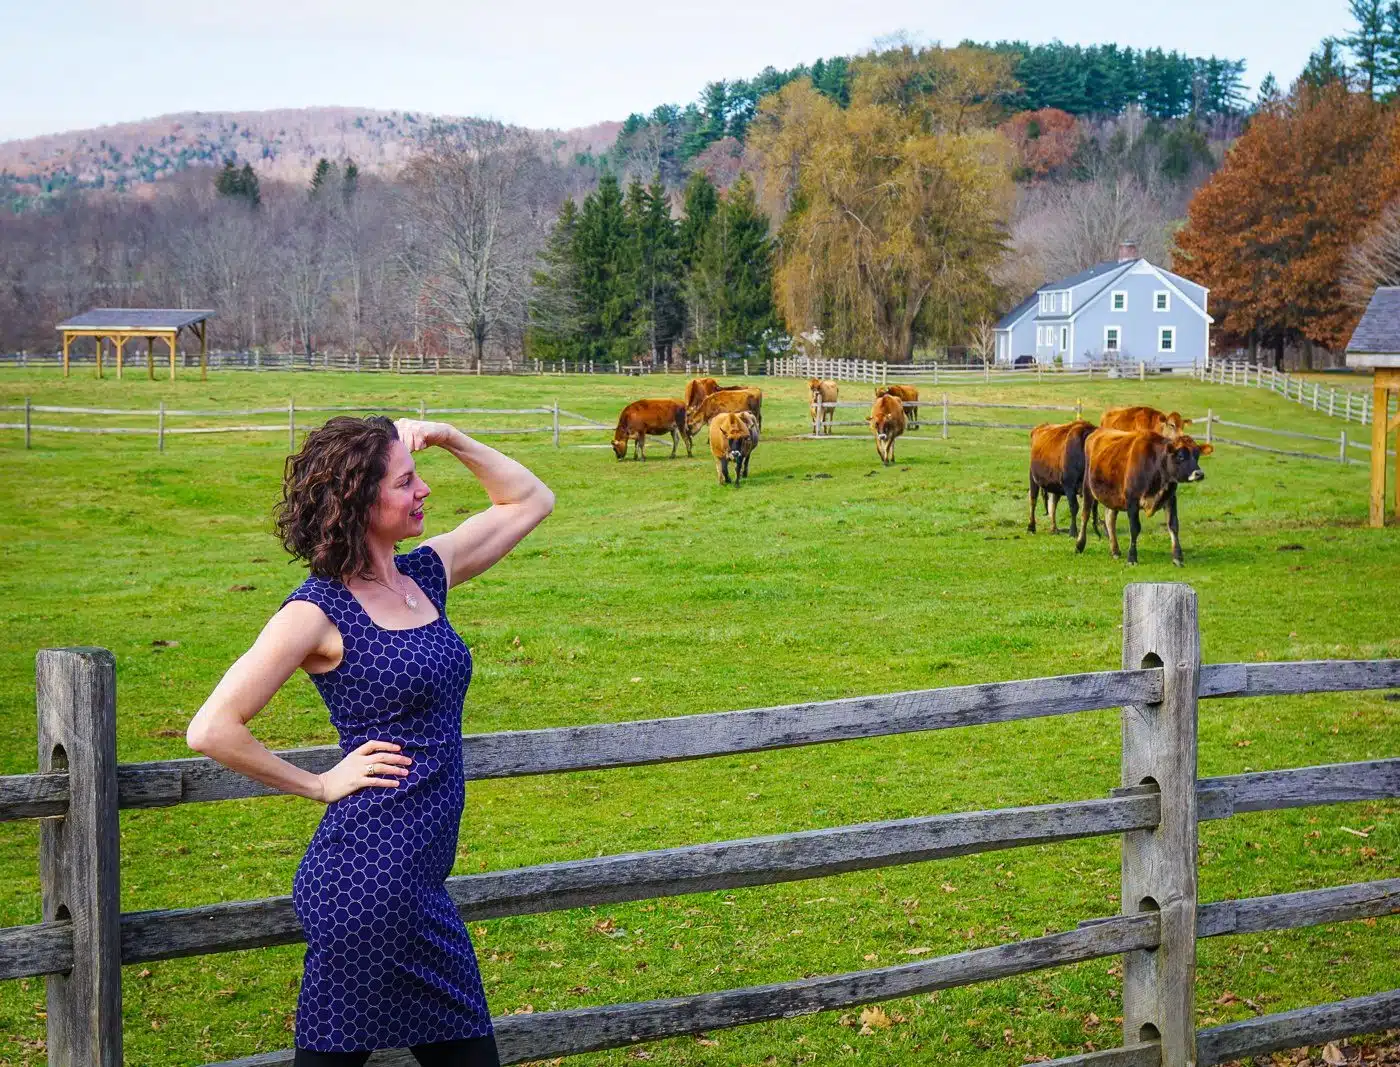 Flexing my biceps in a dress at Billings Farm, Woodstock, VT.